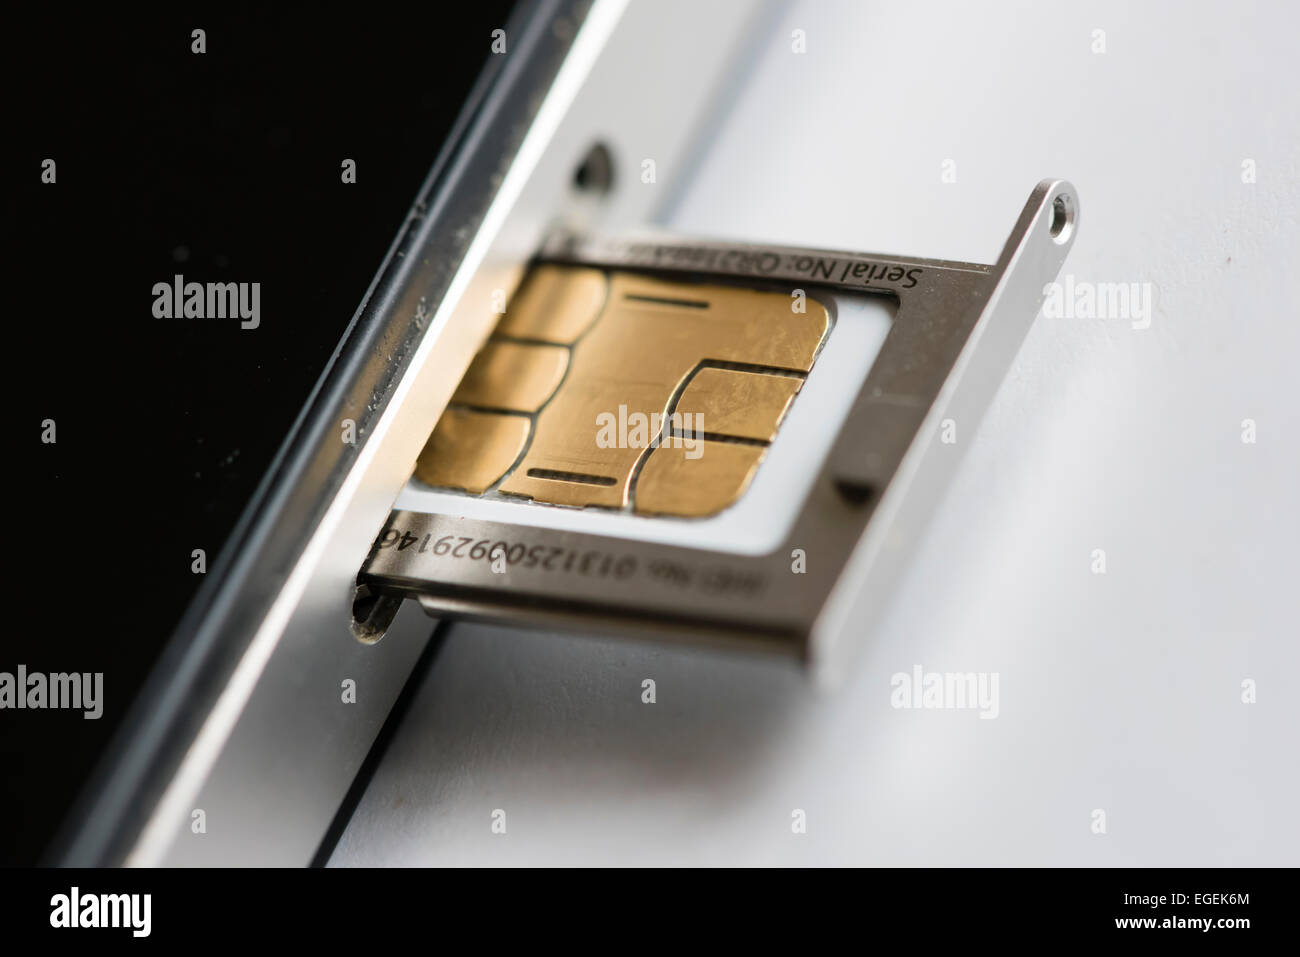 Un micro-SIM insertada en un Apple iphone 4 smartphone Fotografía de stock  - Alamy